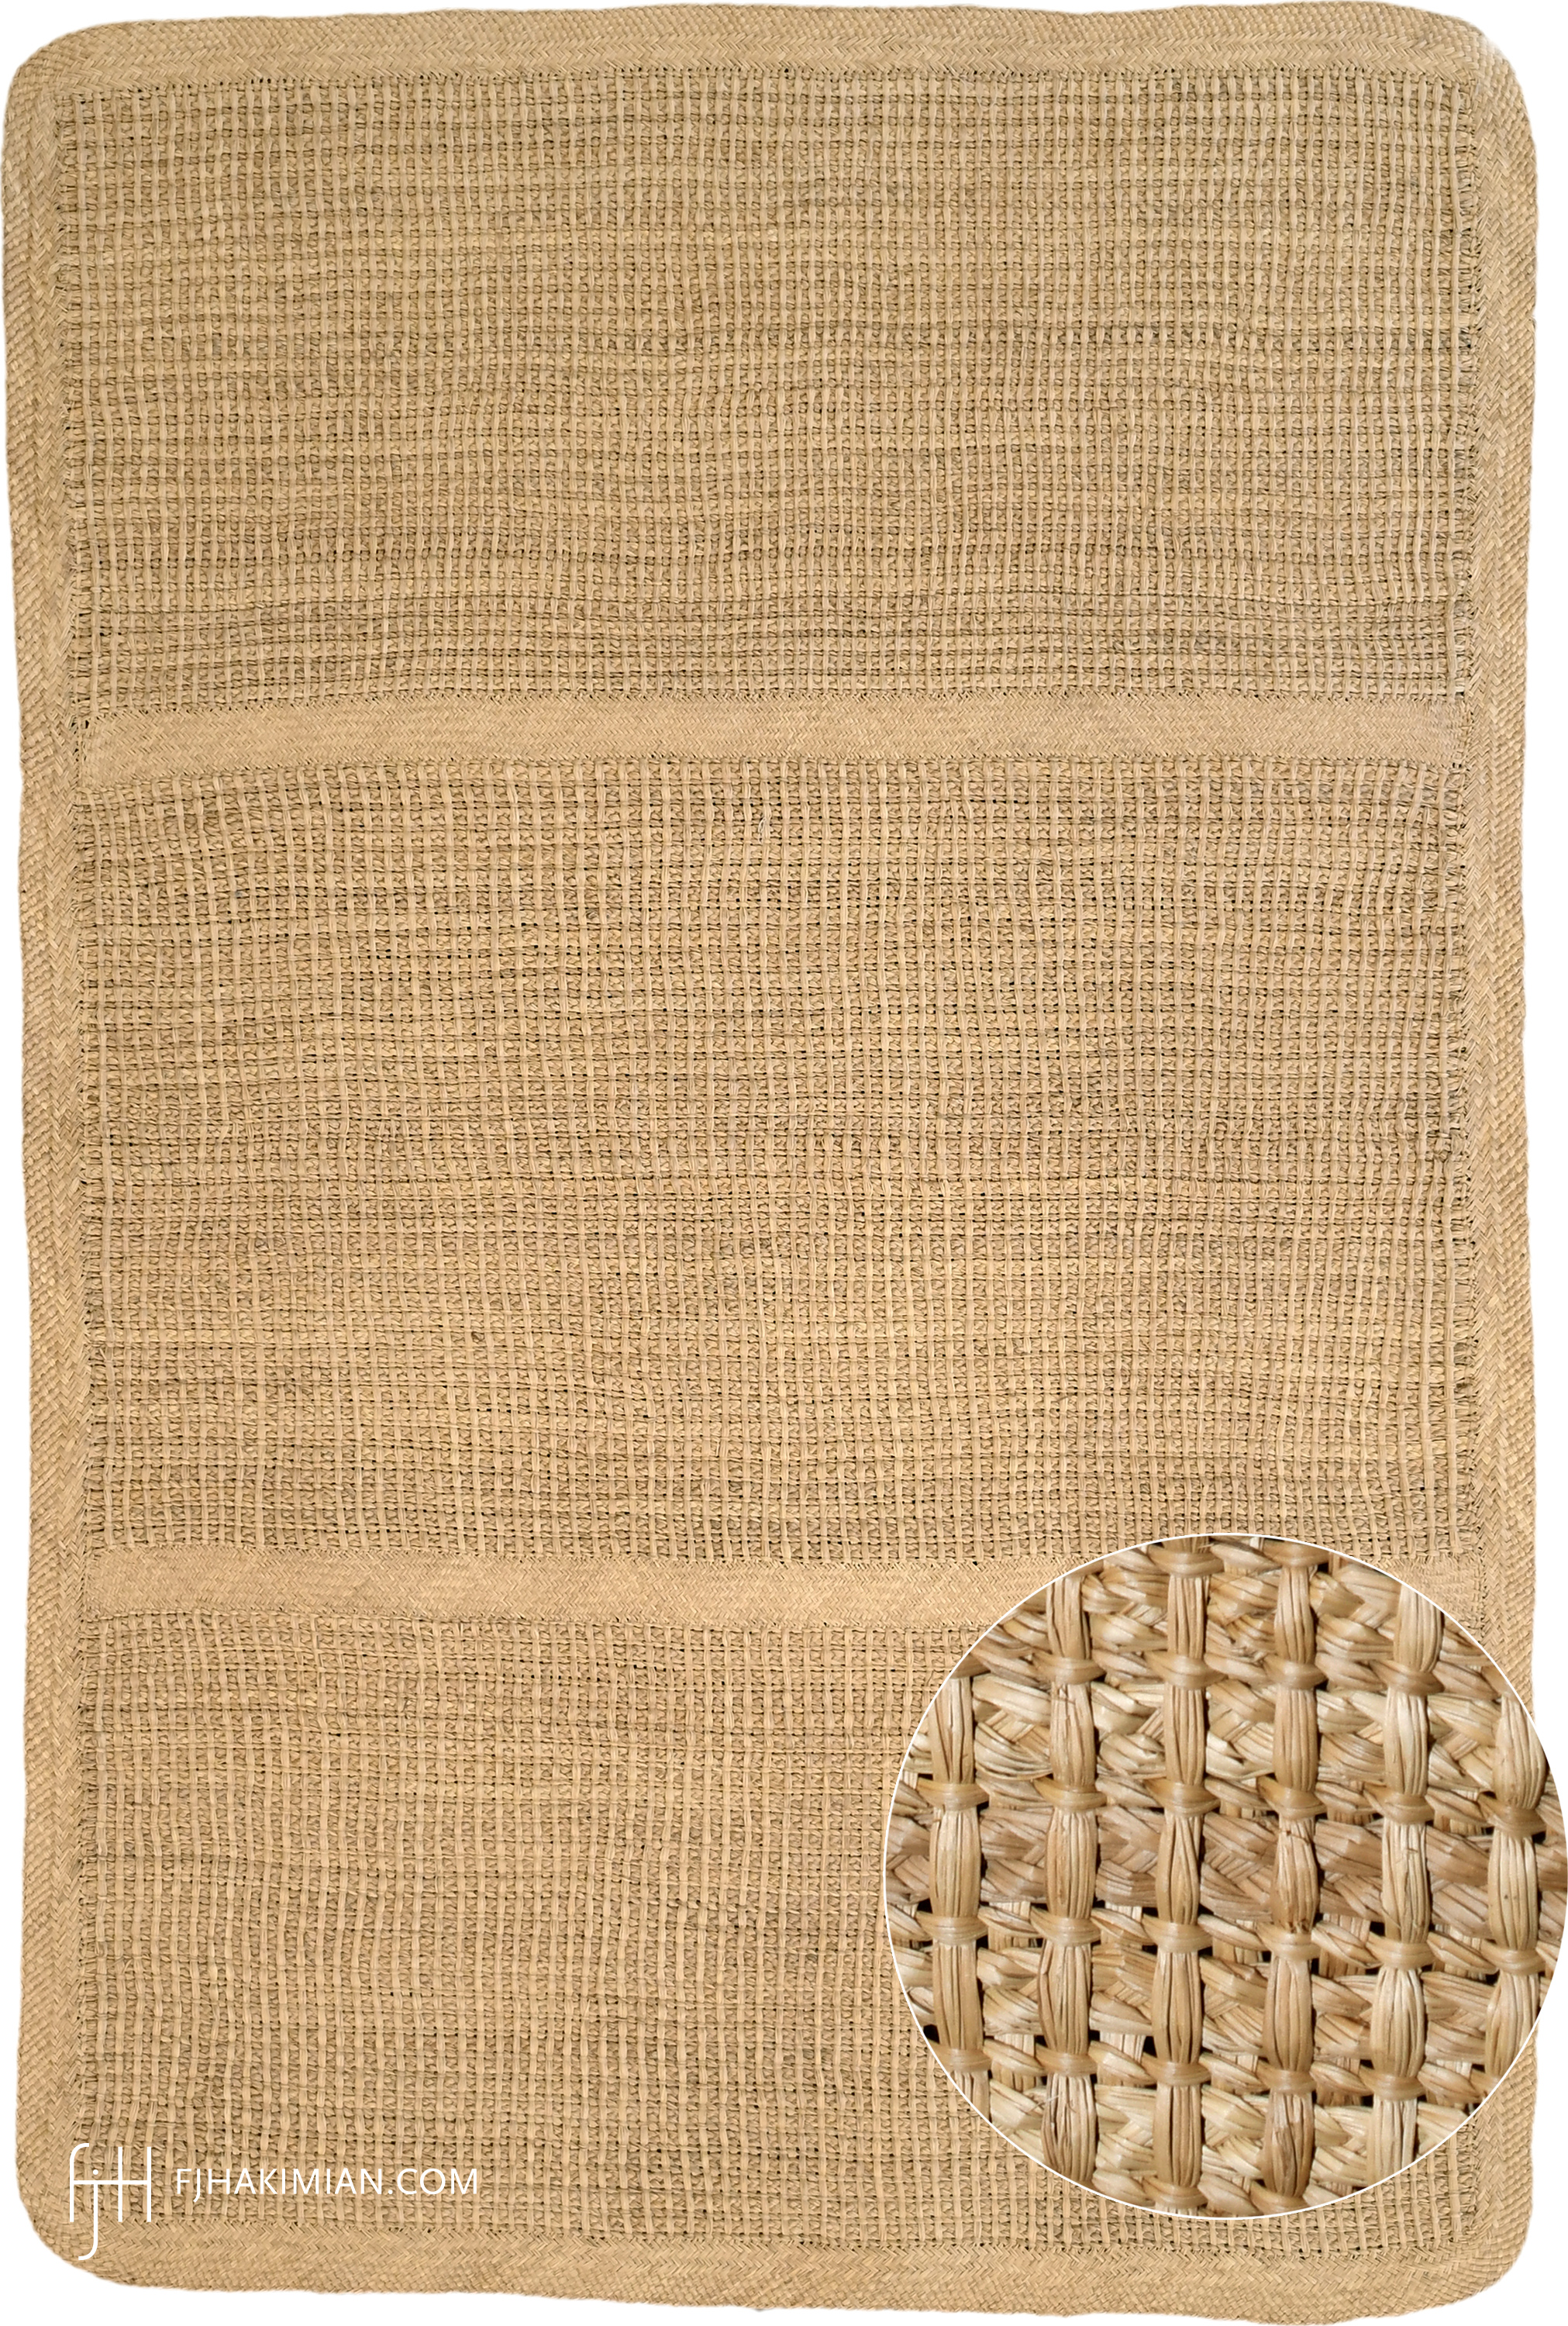 South American Mat #21584 | FJ Hakimian | Carpet Gallery in New York